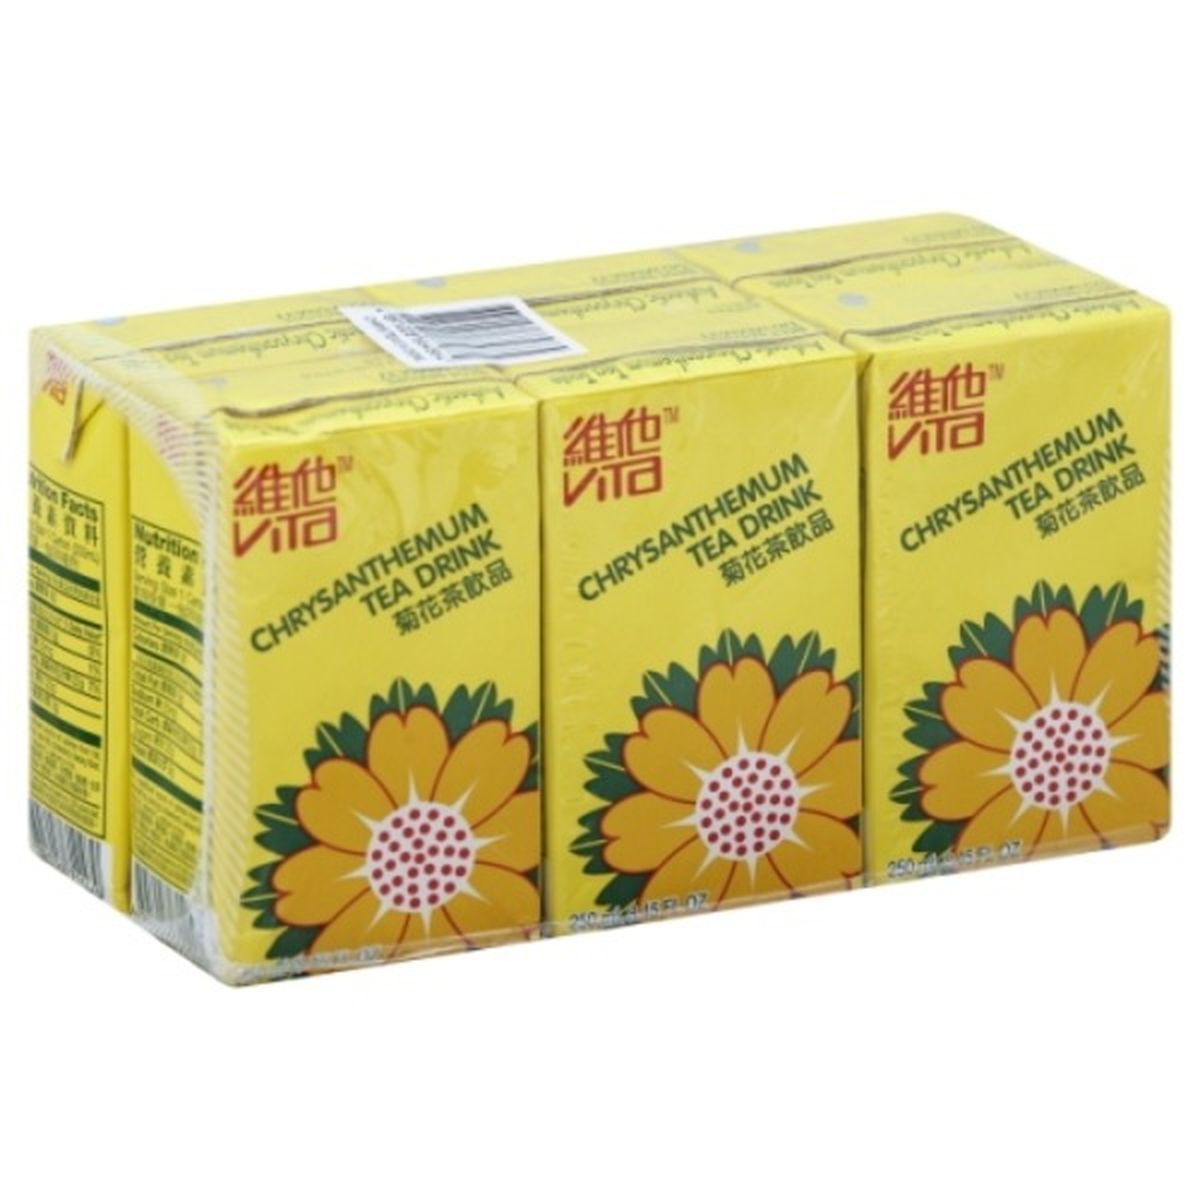 Calories in Vita Tea Drink, Chrysanthemum